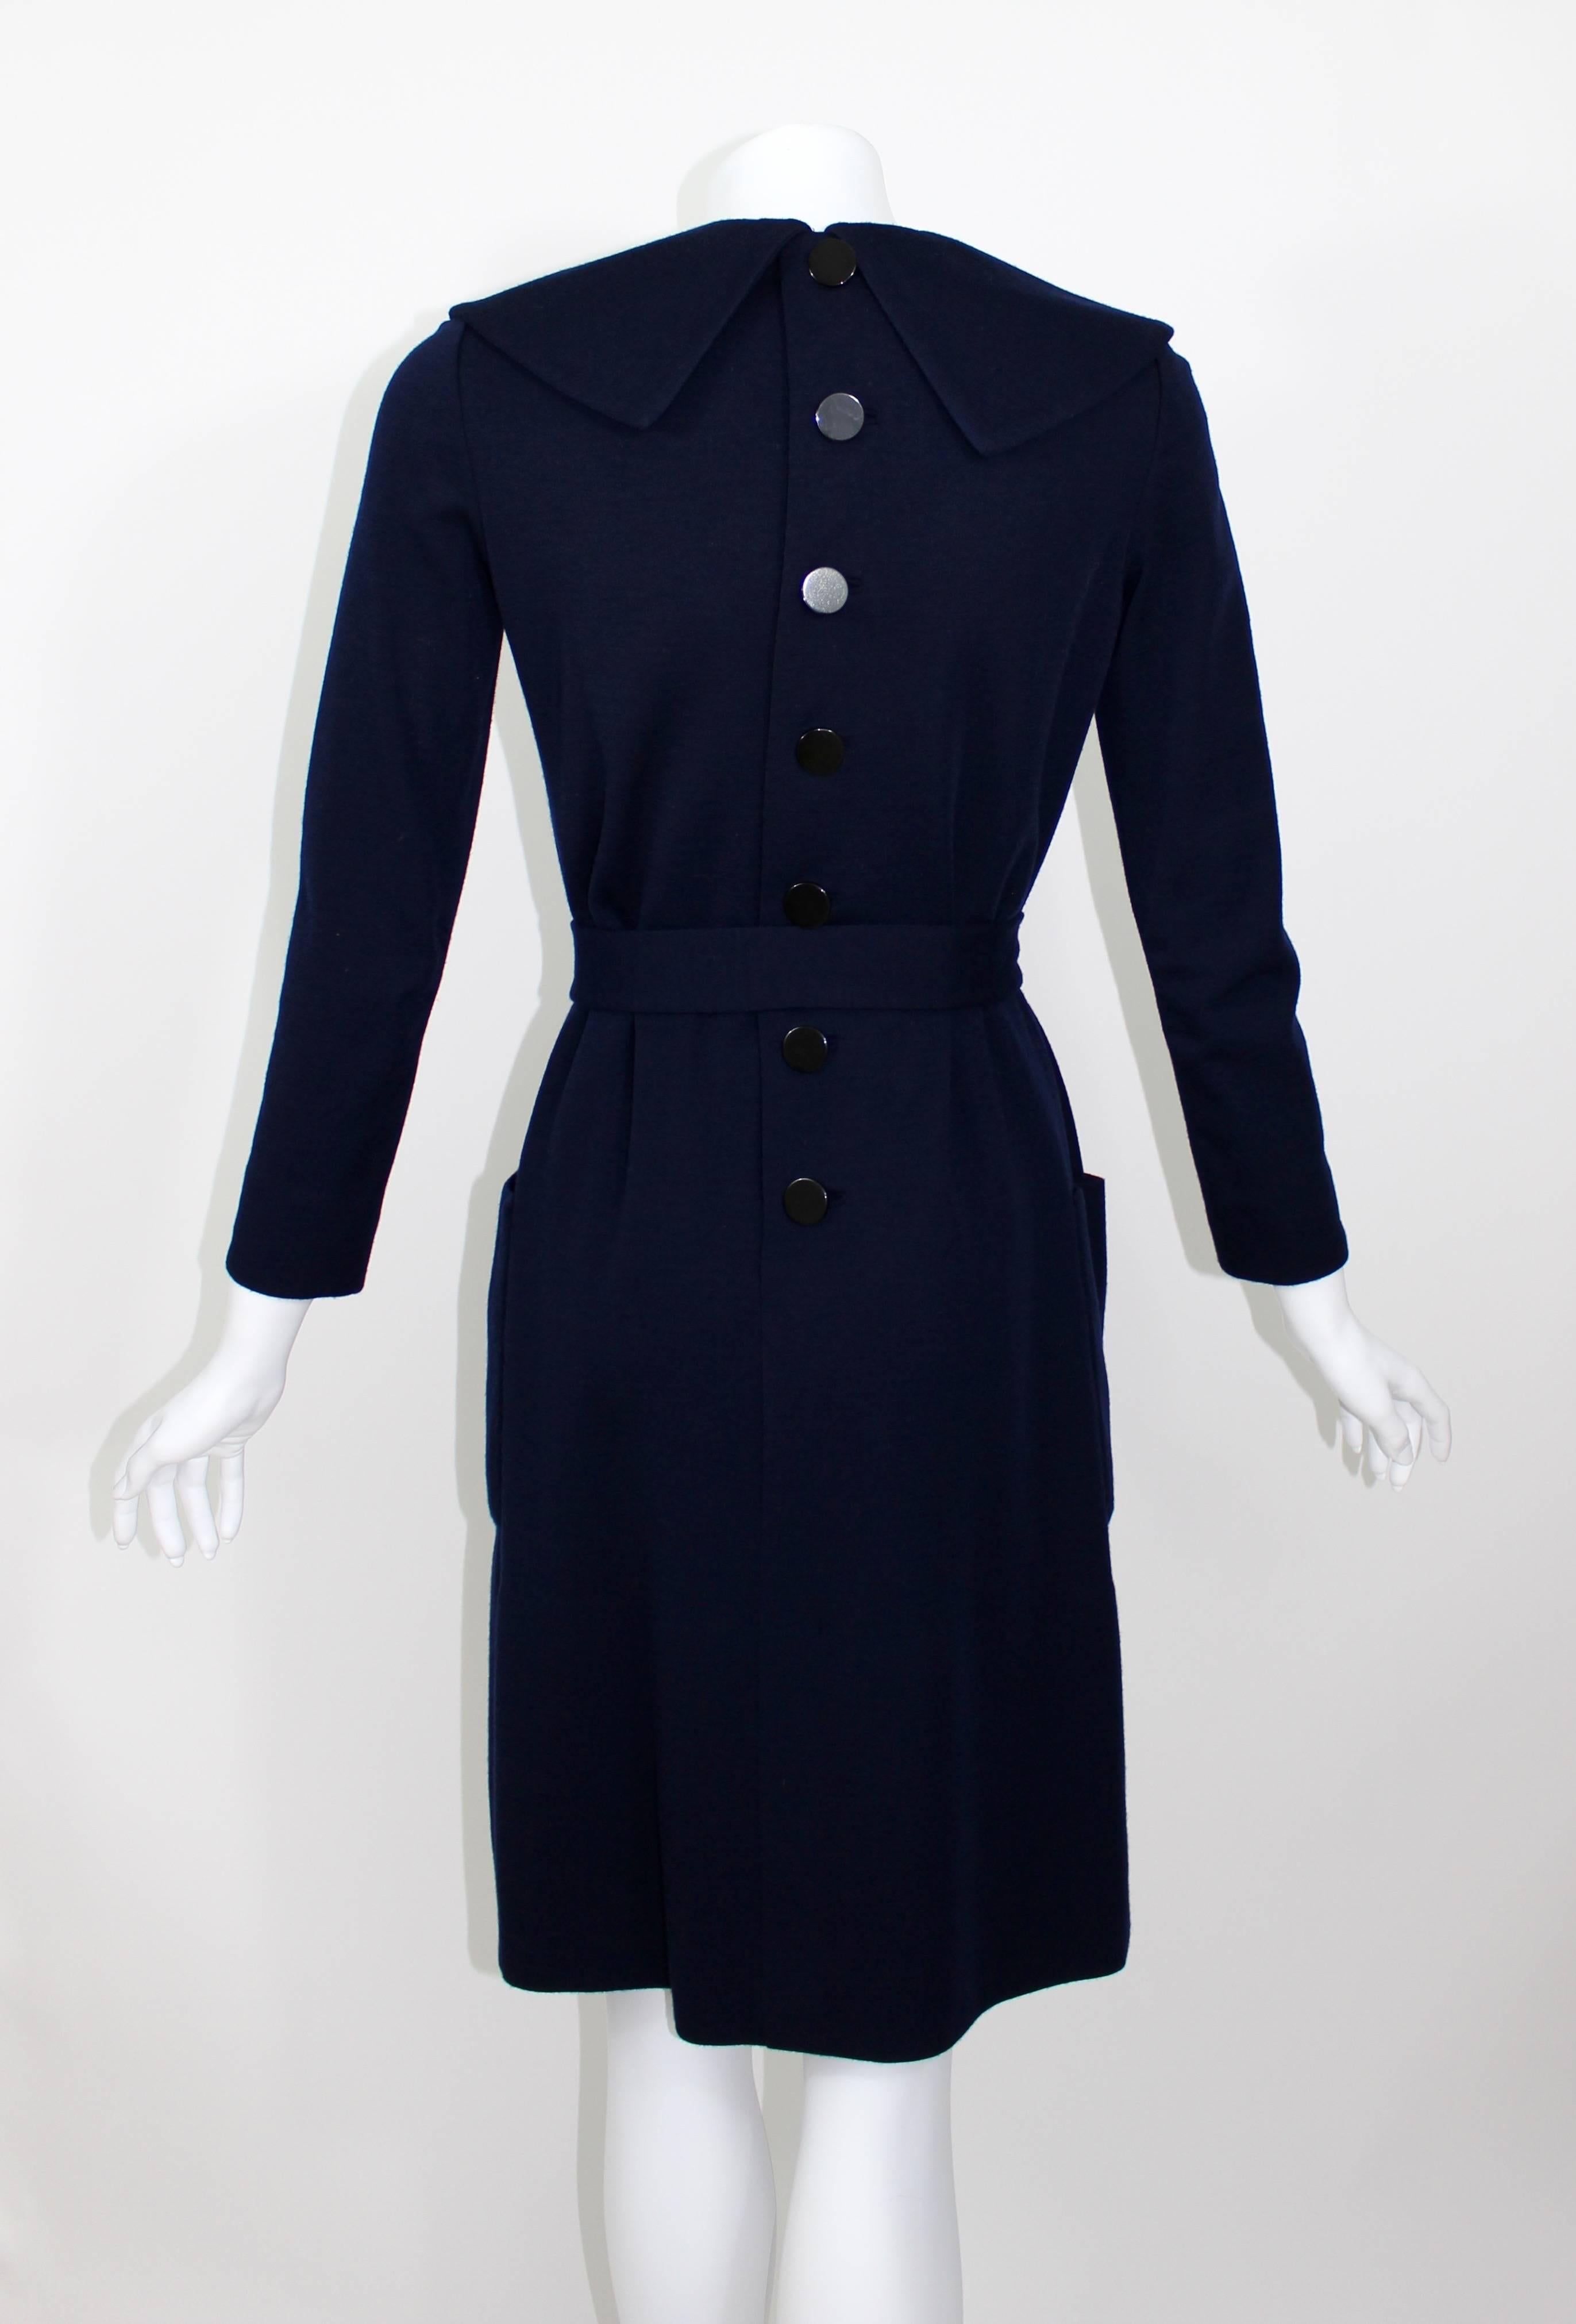 Women's 1960s Norman Norell Midnight Blue Wool Jersey Dress For Sale